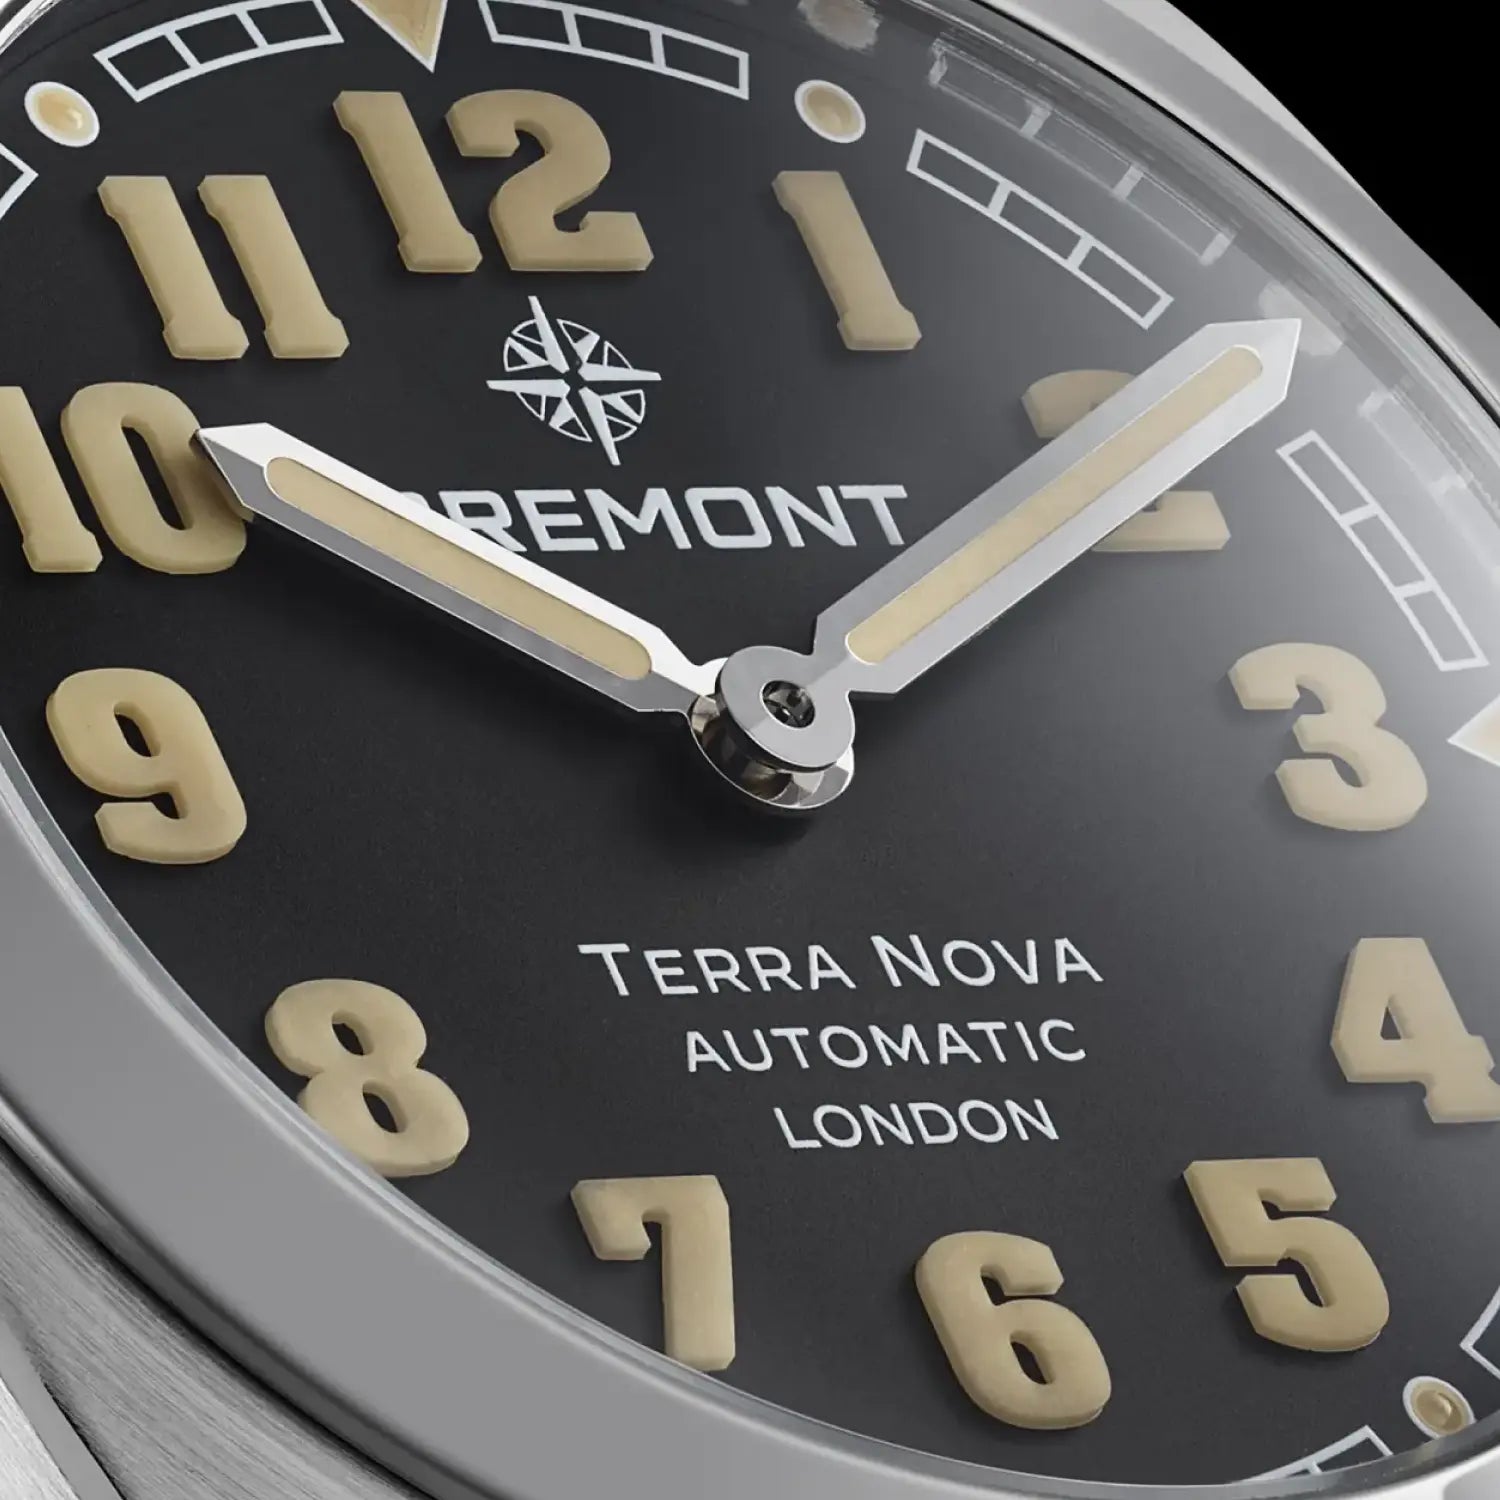 Bremont Watch Company Watches | Mens | Terra Nova Terra Nova 38 [Black Dial, Bracelet]